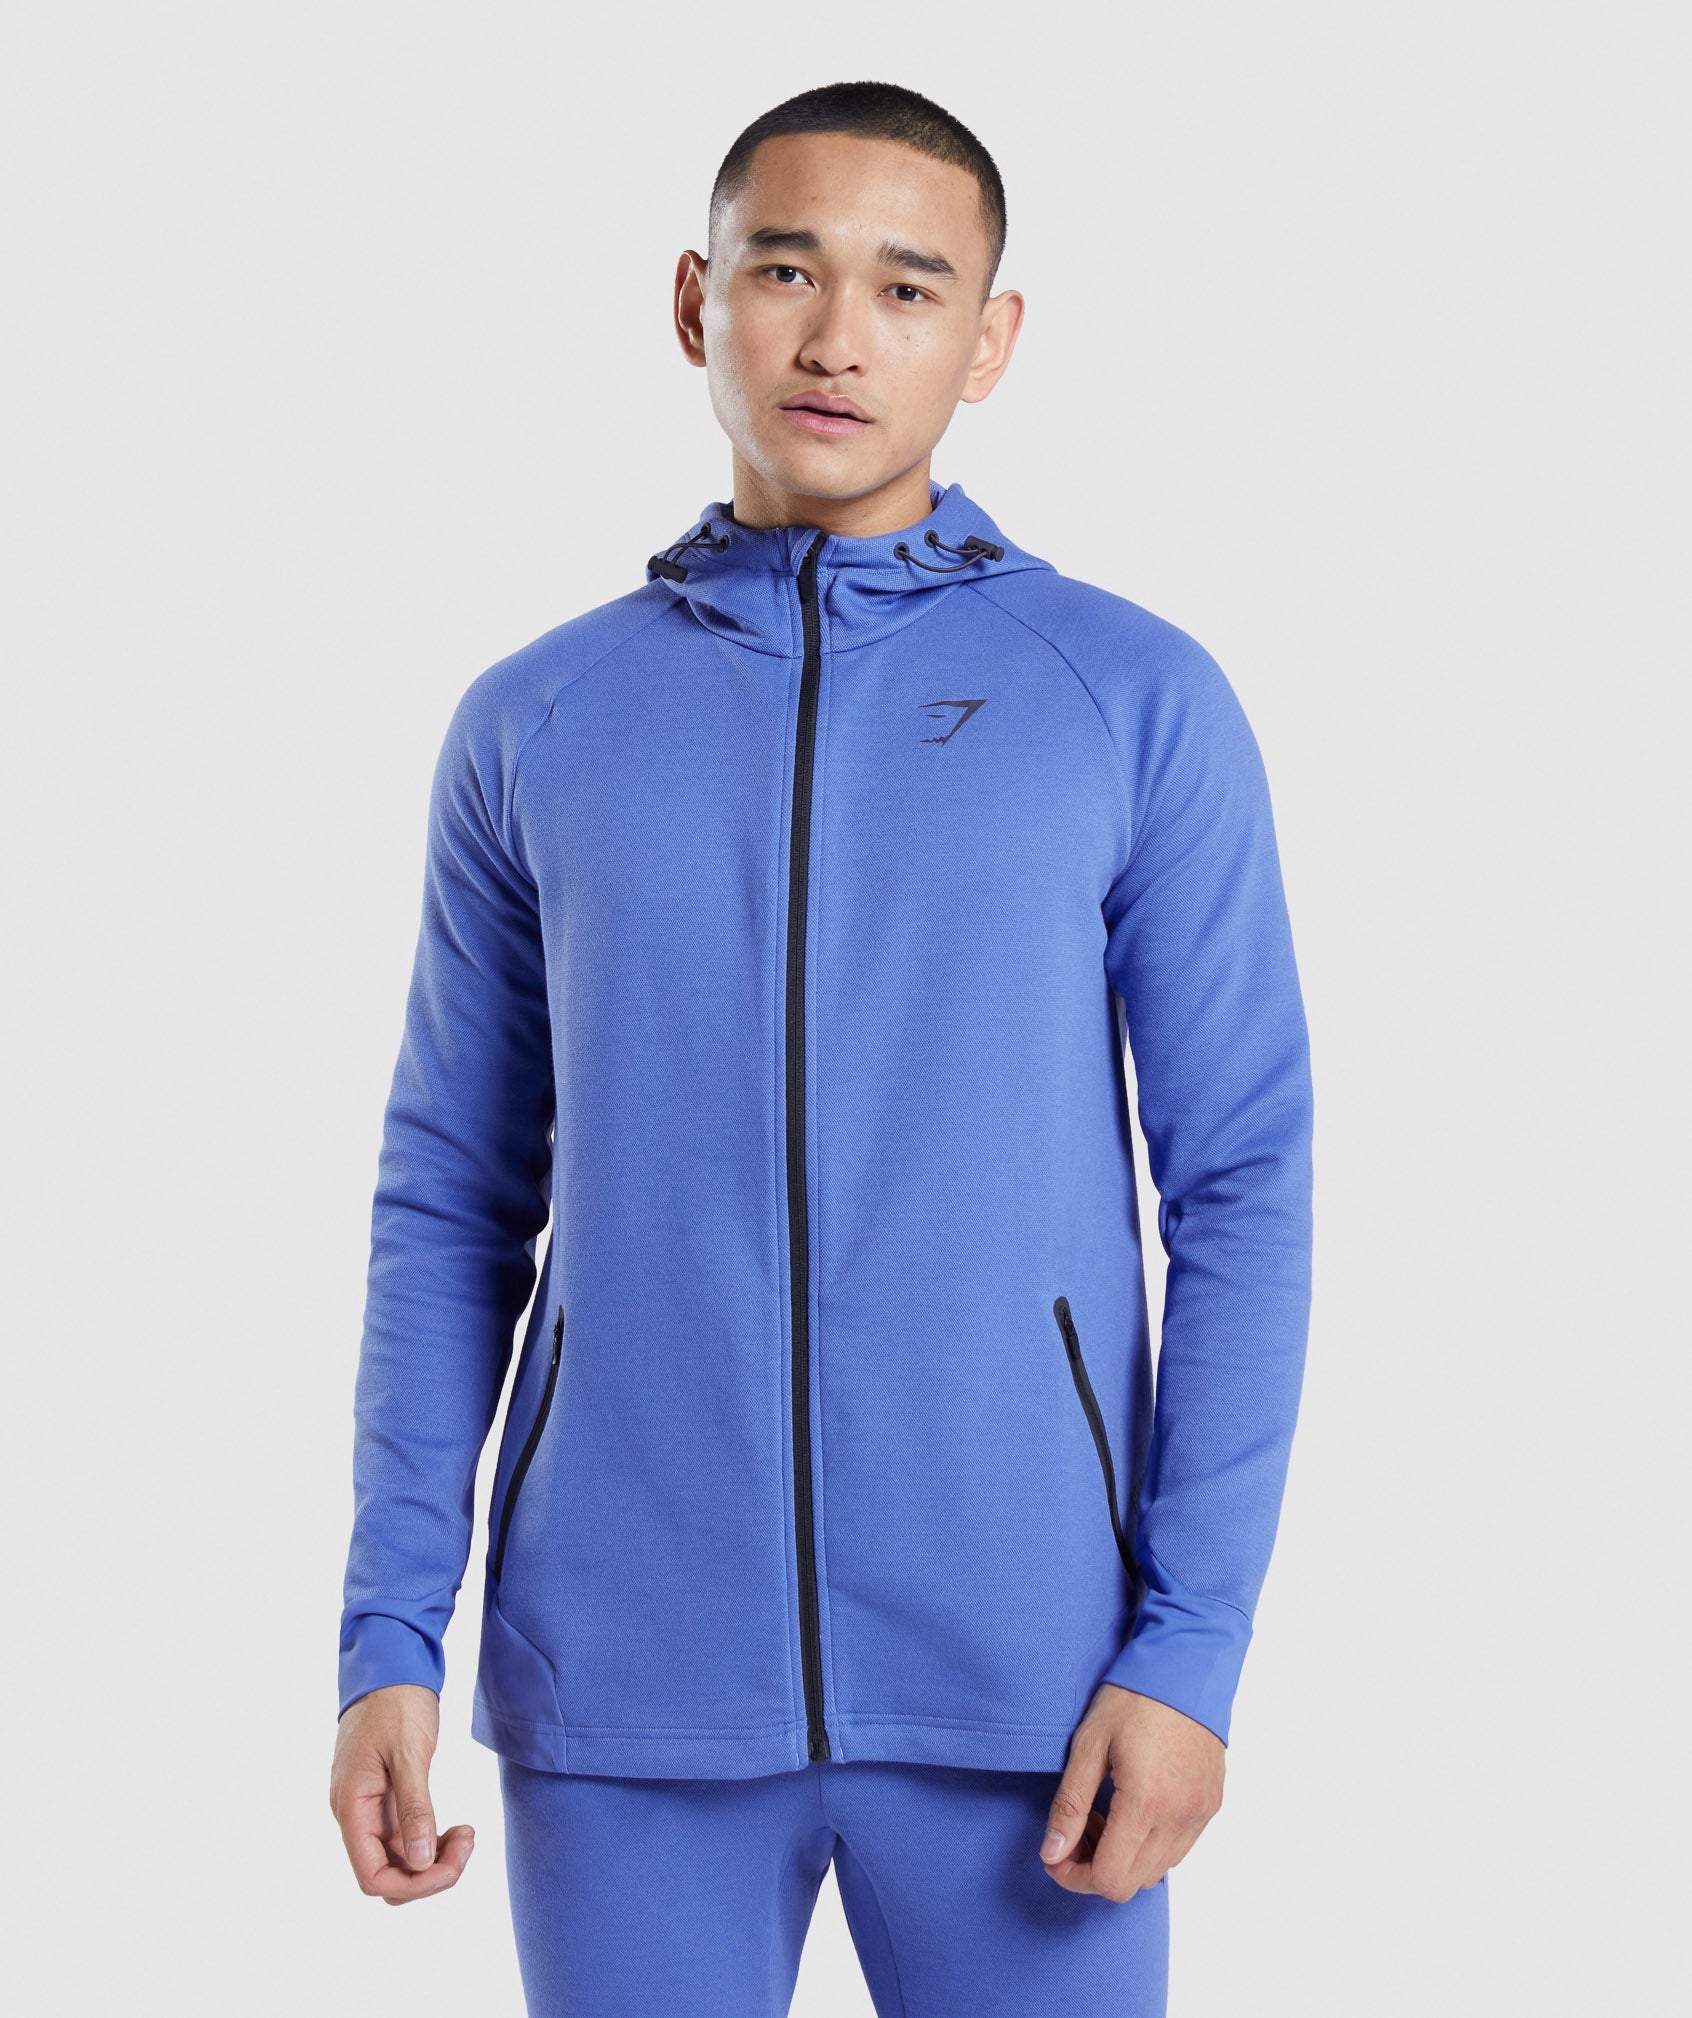 Gymshark Apex Technical Jacket - Court Blue